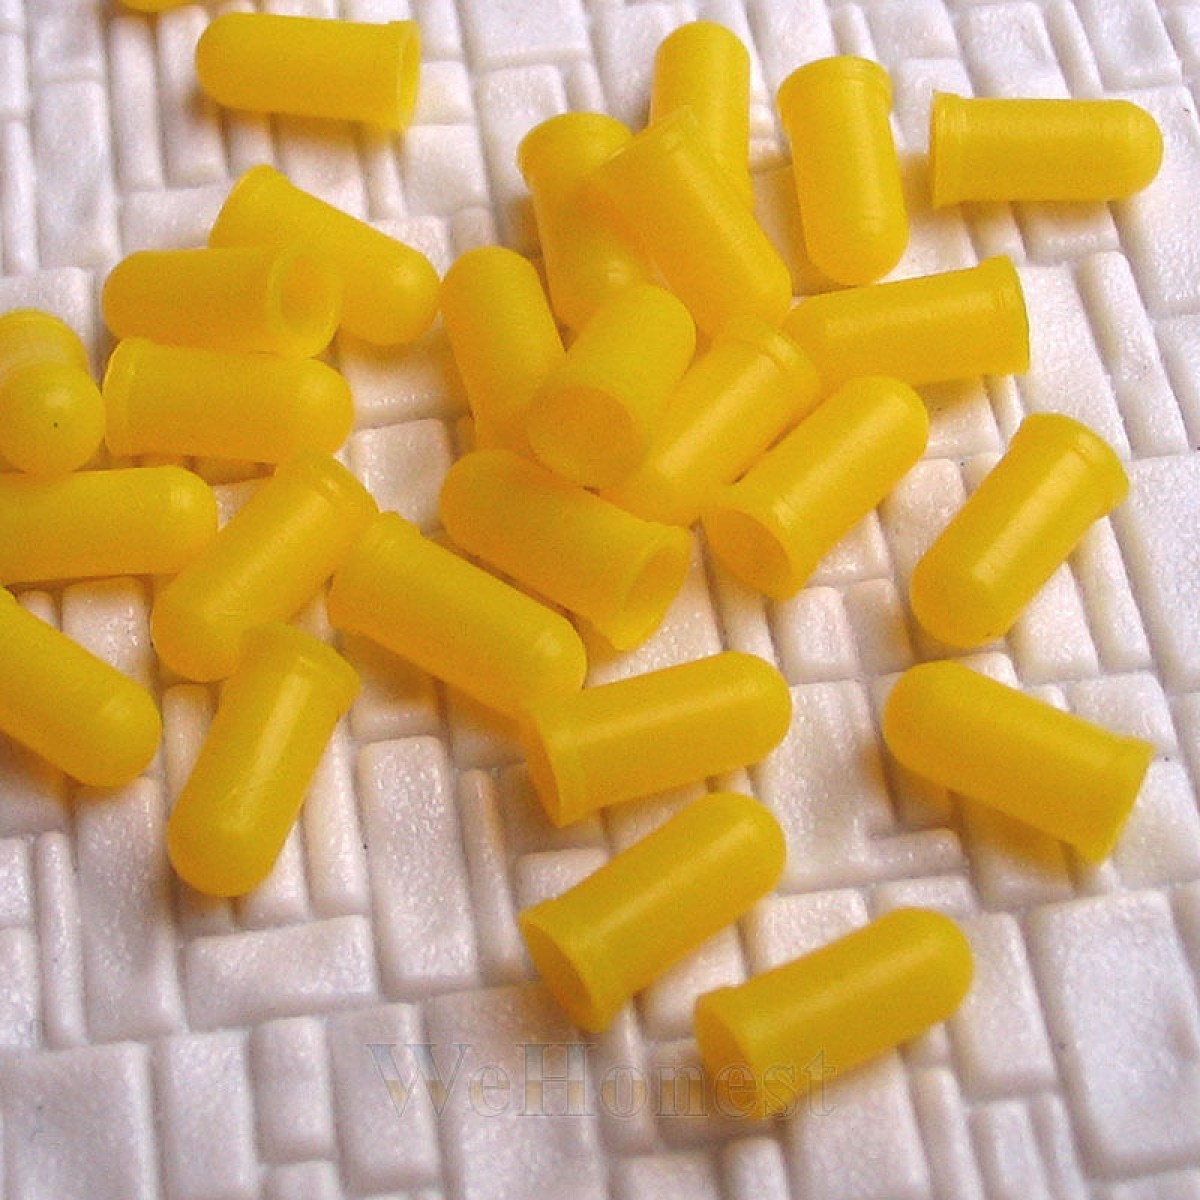 20 pcs Yellow Caps for Grain of Wheat Bulbs